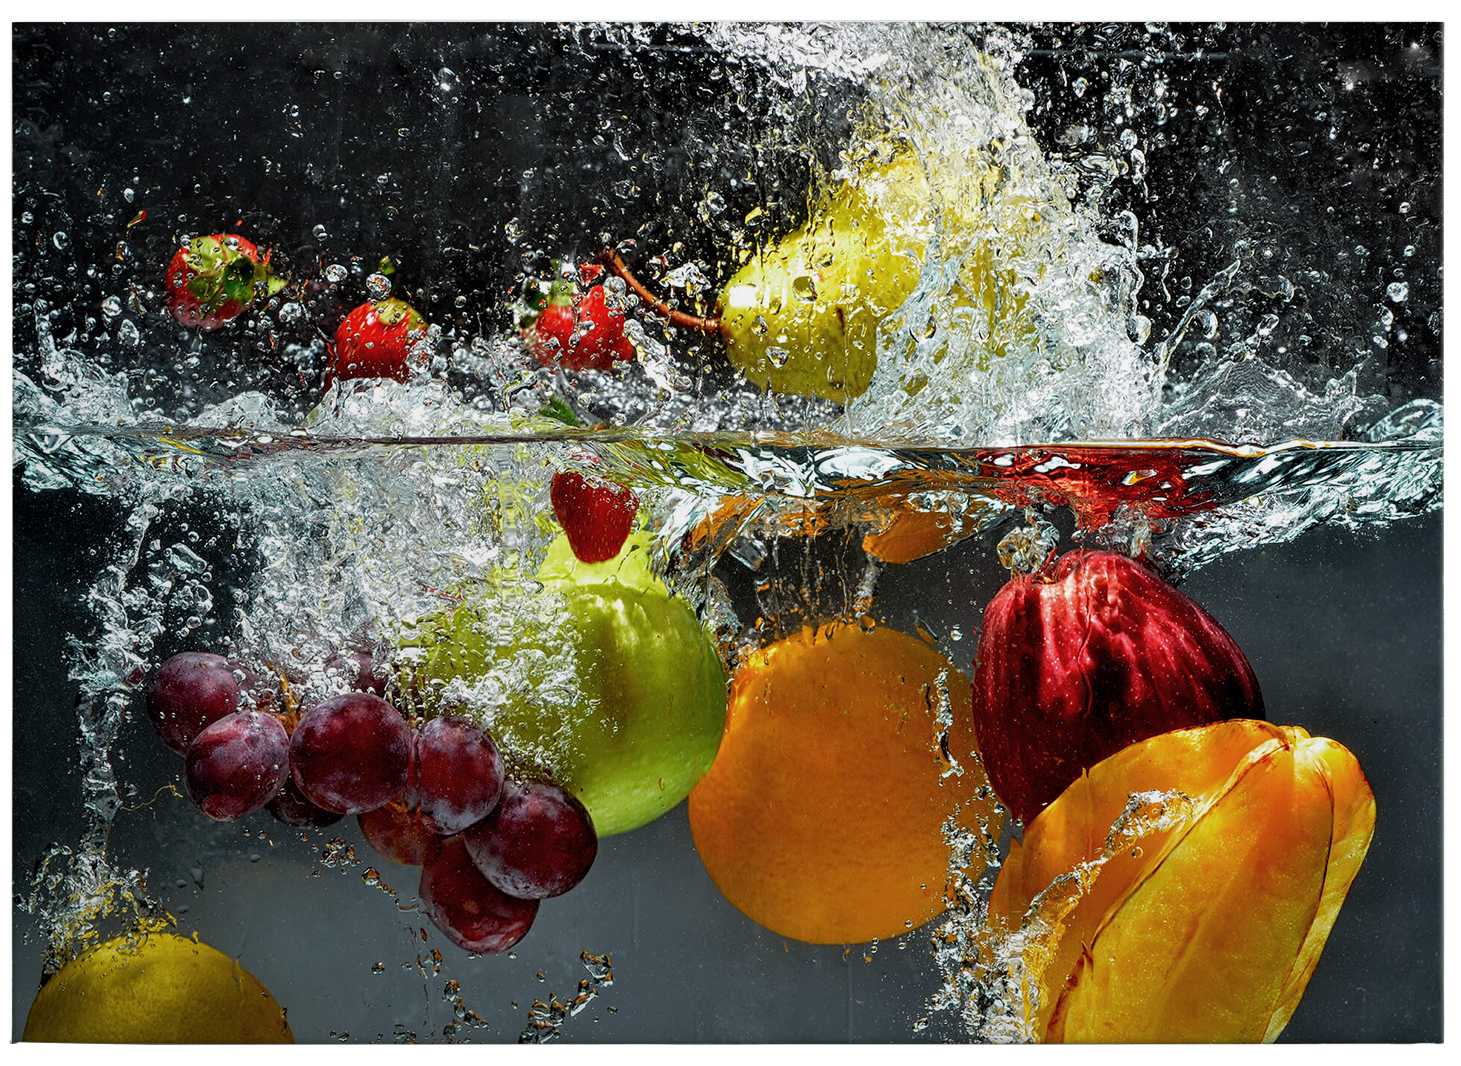             Toile Fruits frais au bain-marie - 0,70 m x 0,50 m
        